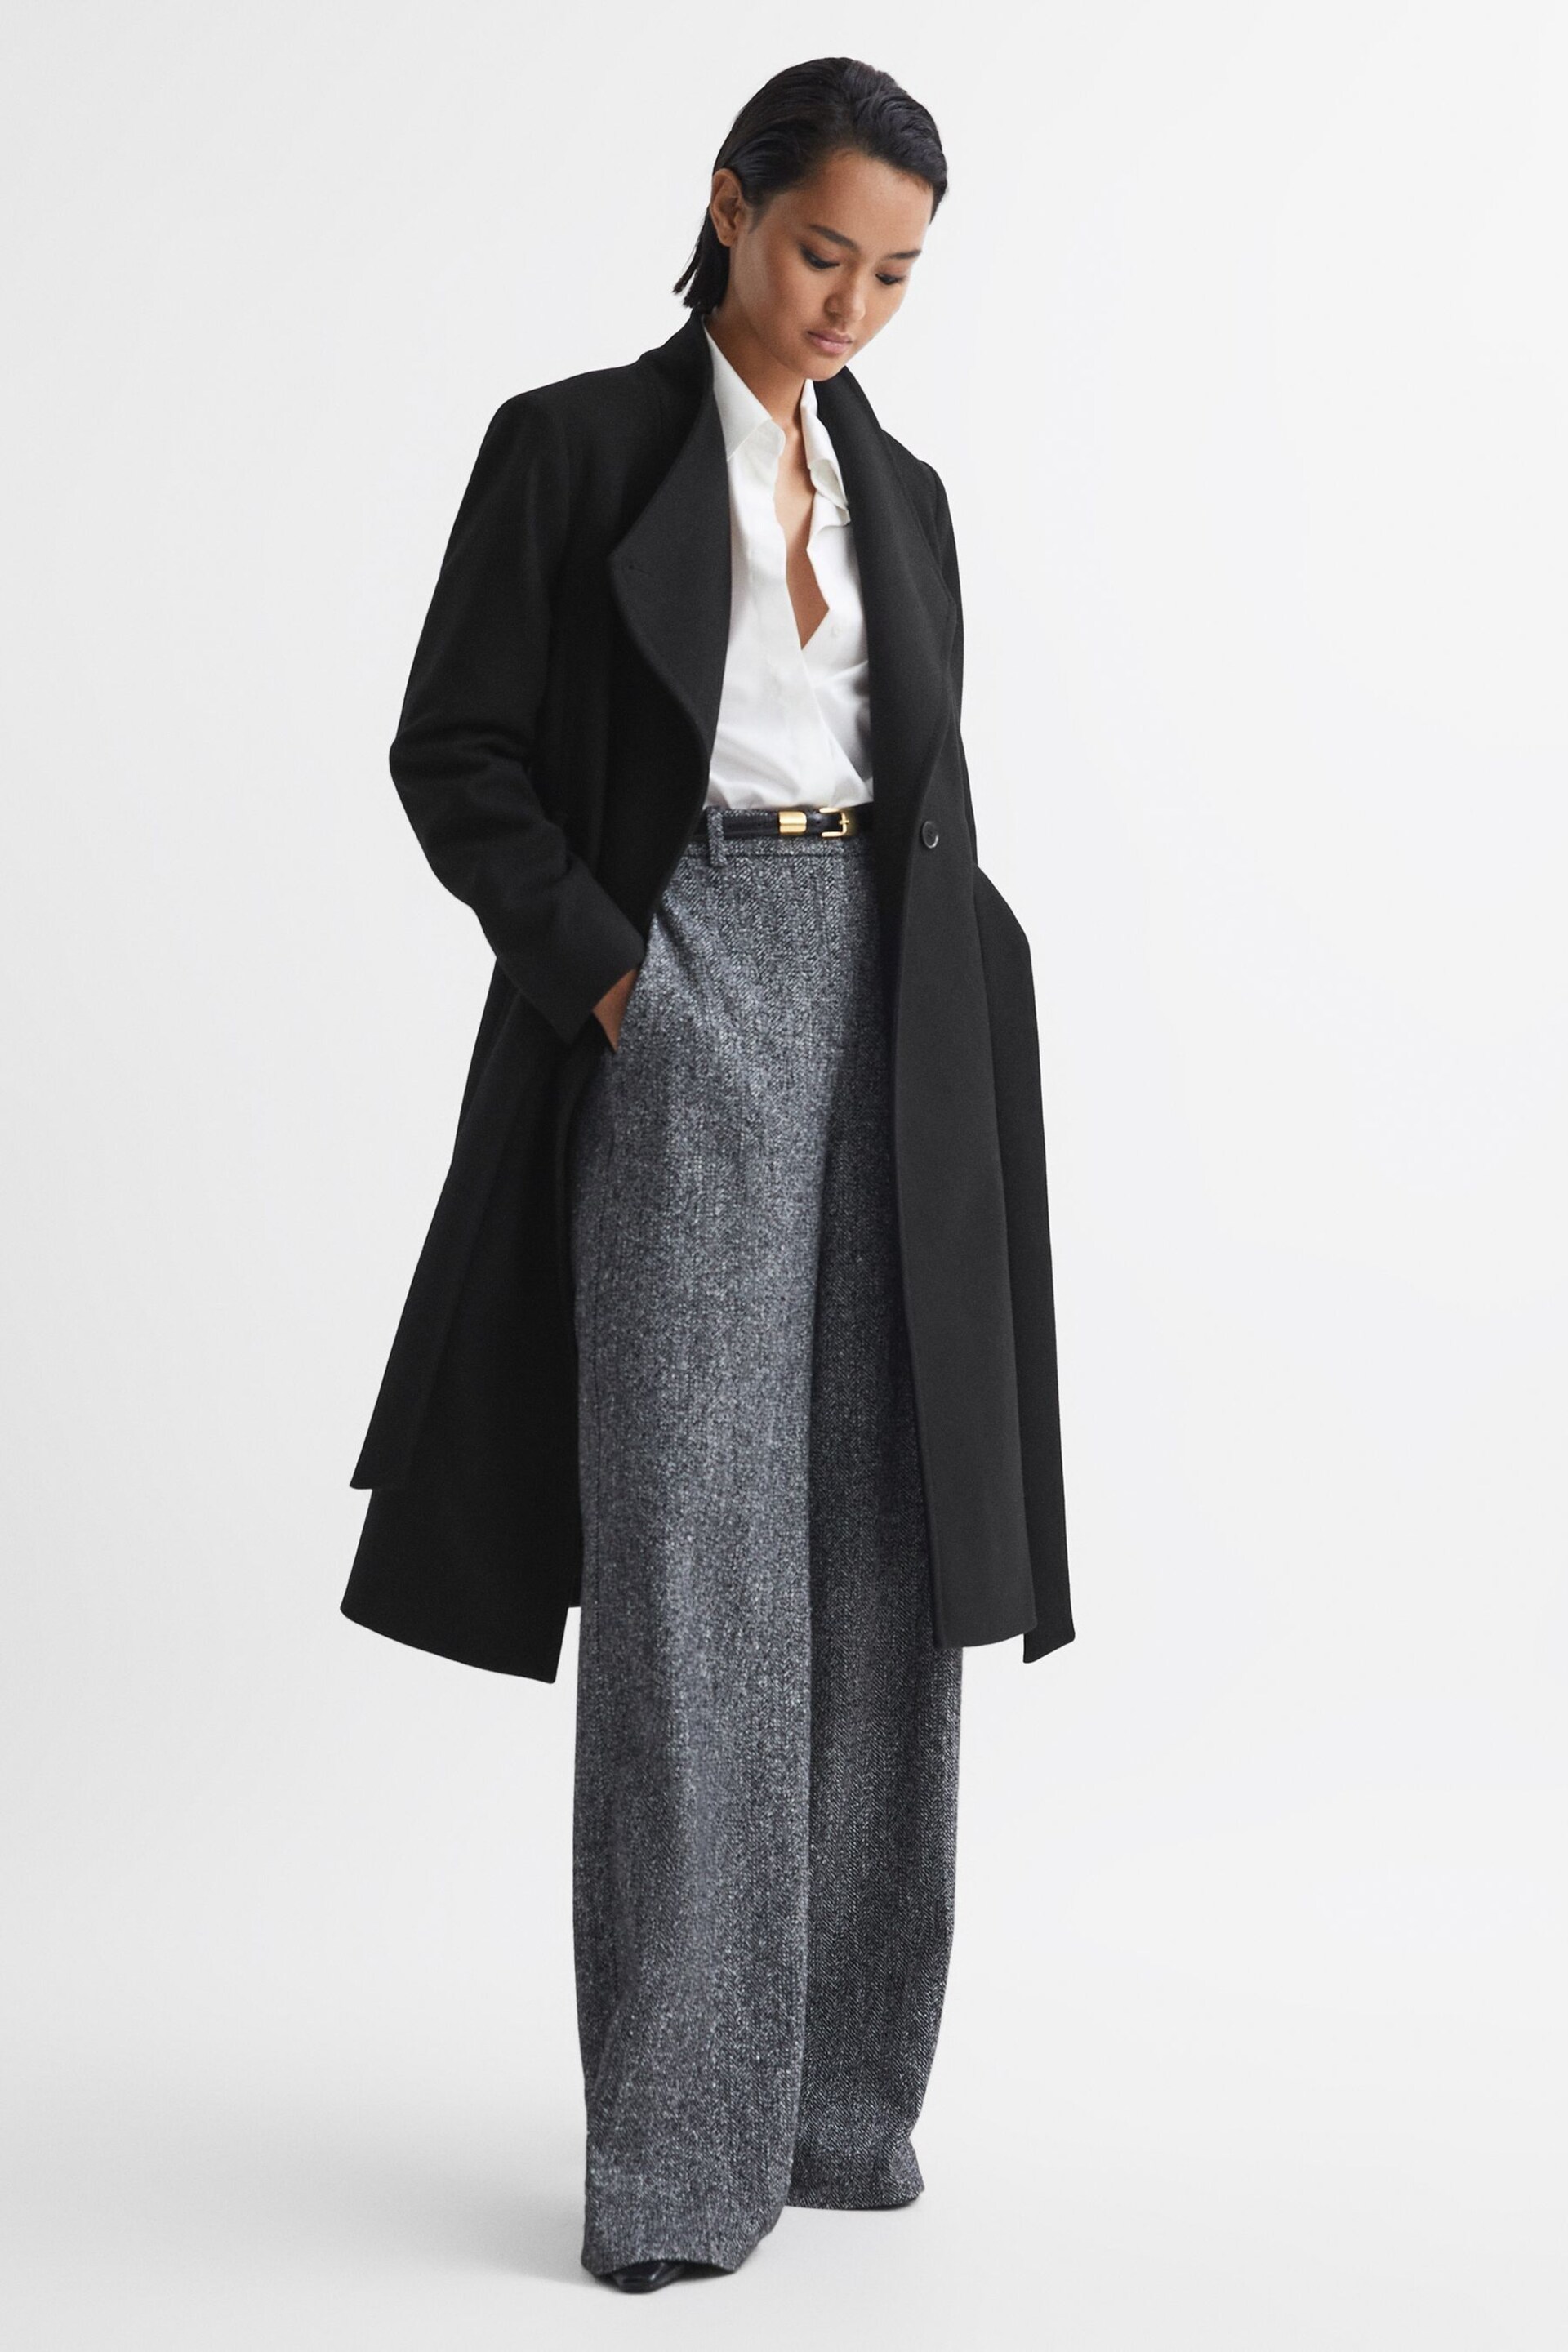 Reiss Black Freja Tailored Wool Blend Longline Coat - Image 1 of 6